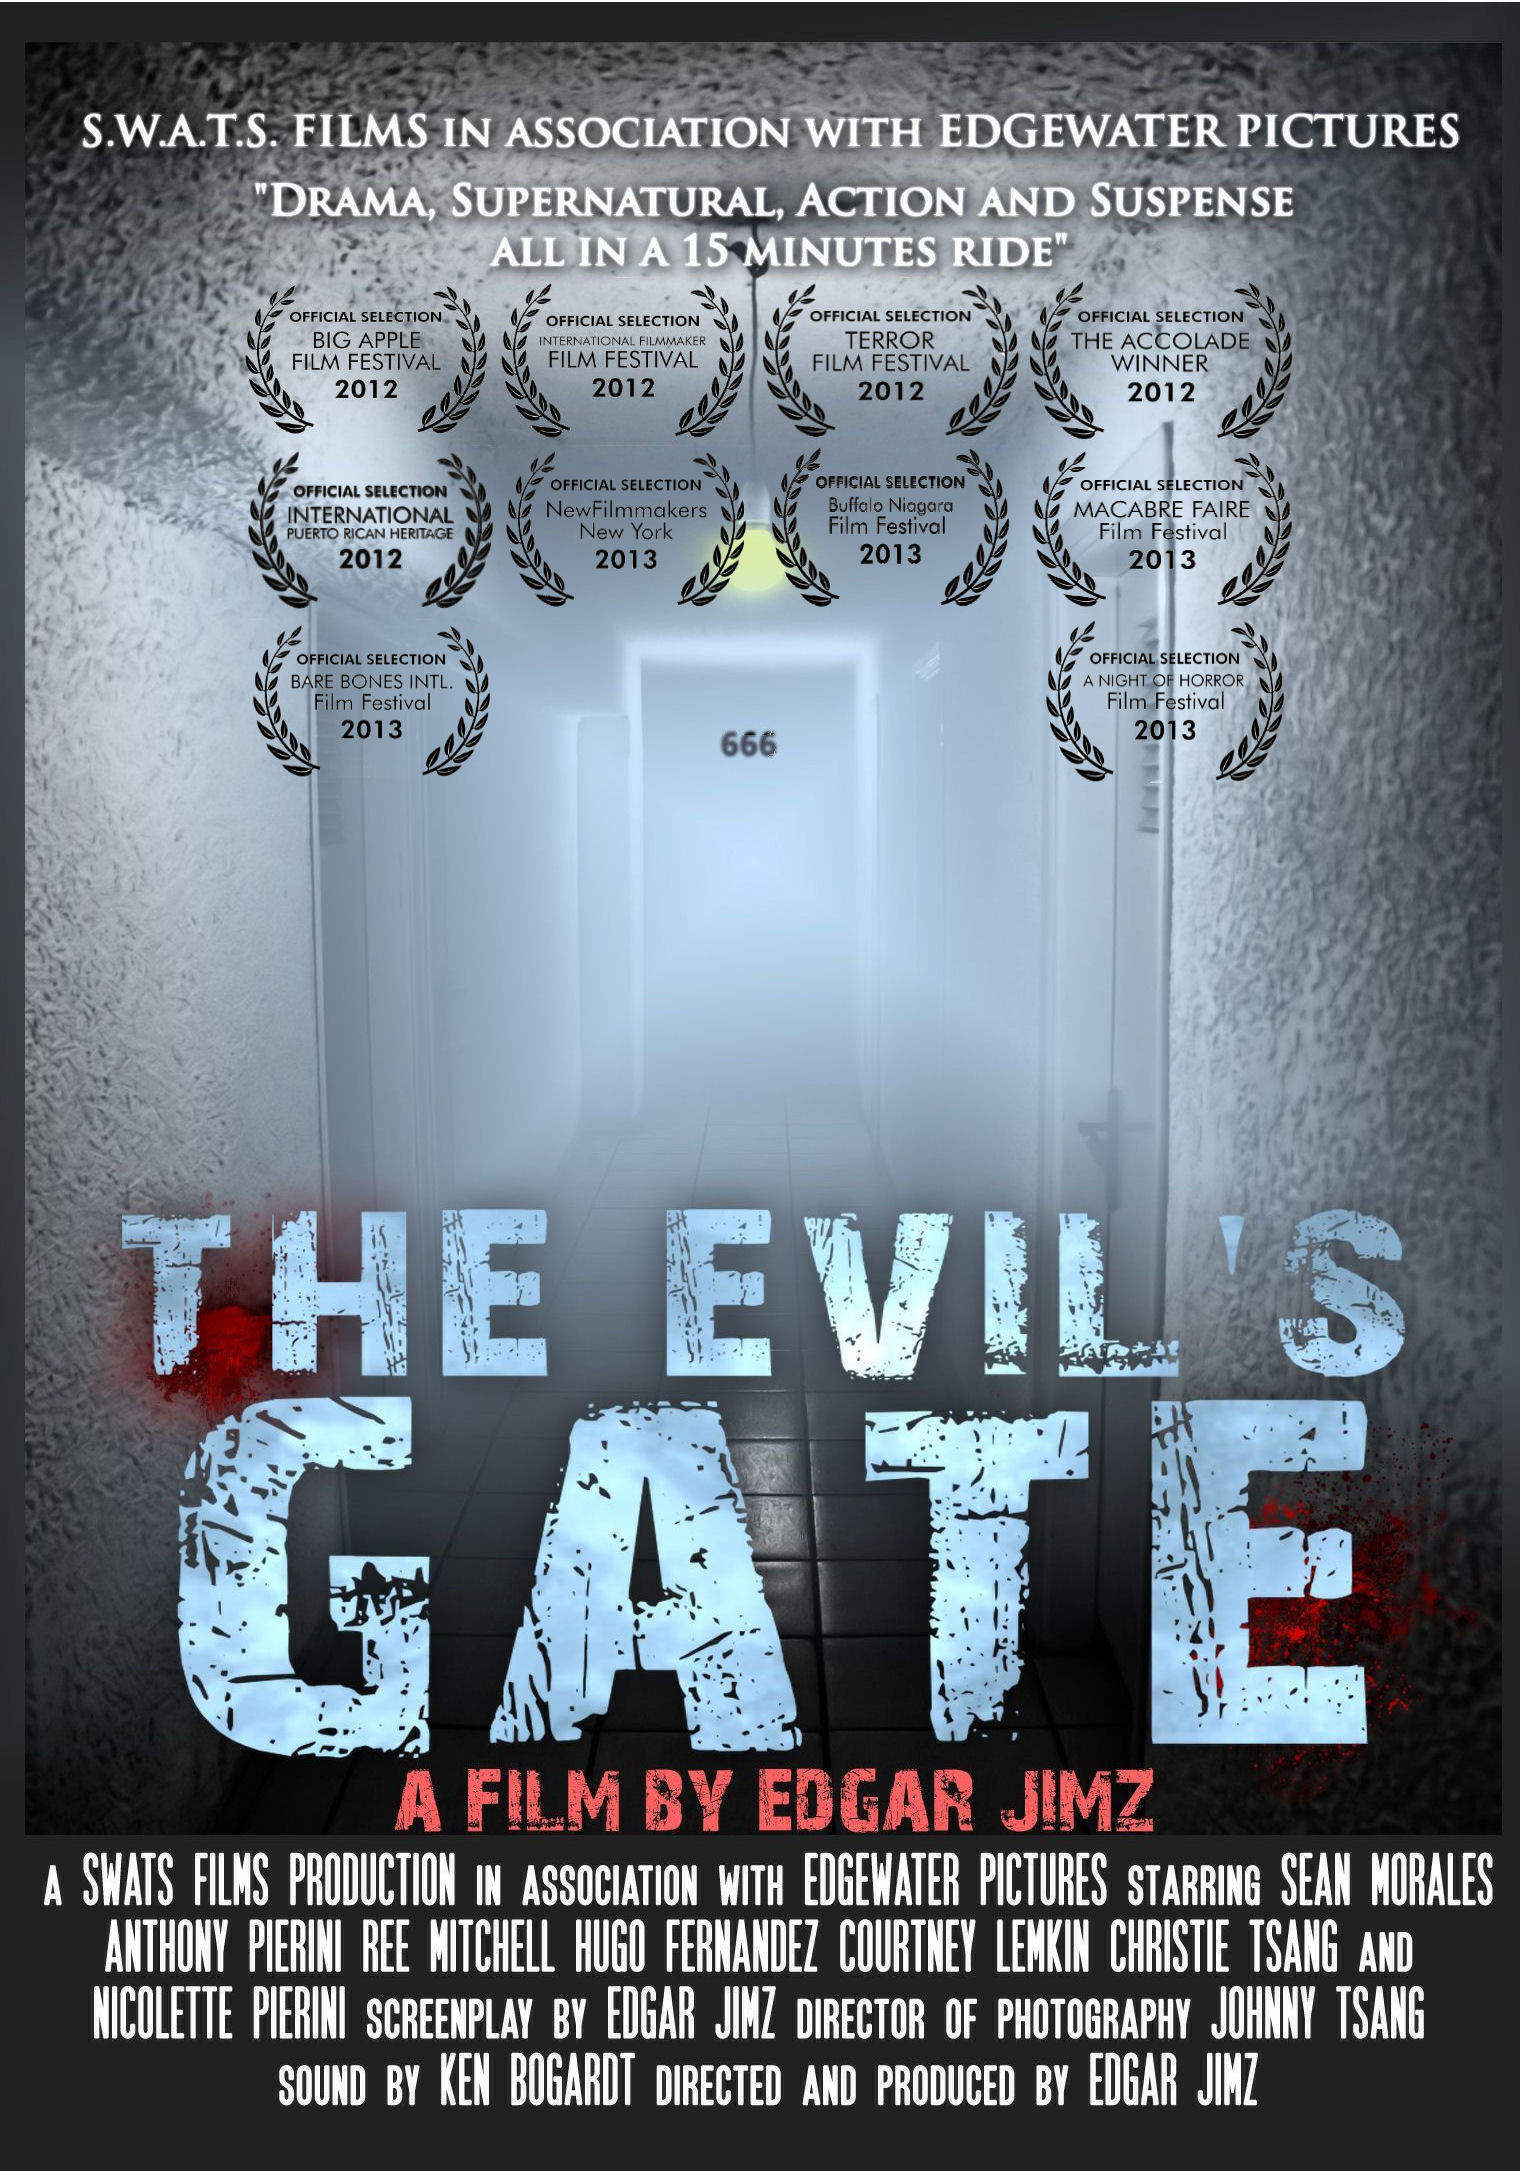 The Evil's Gate